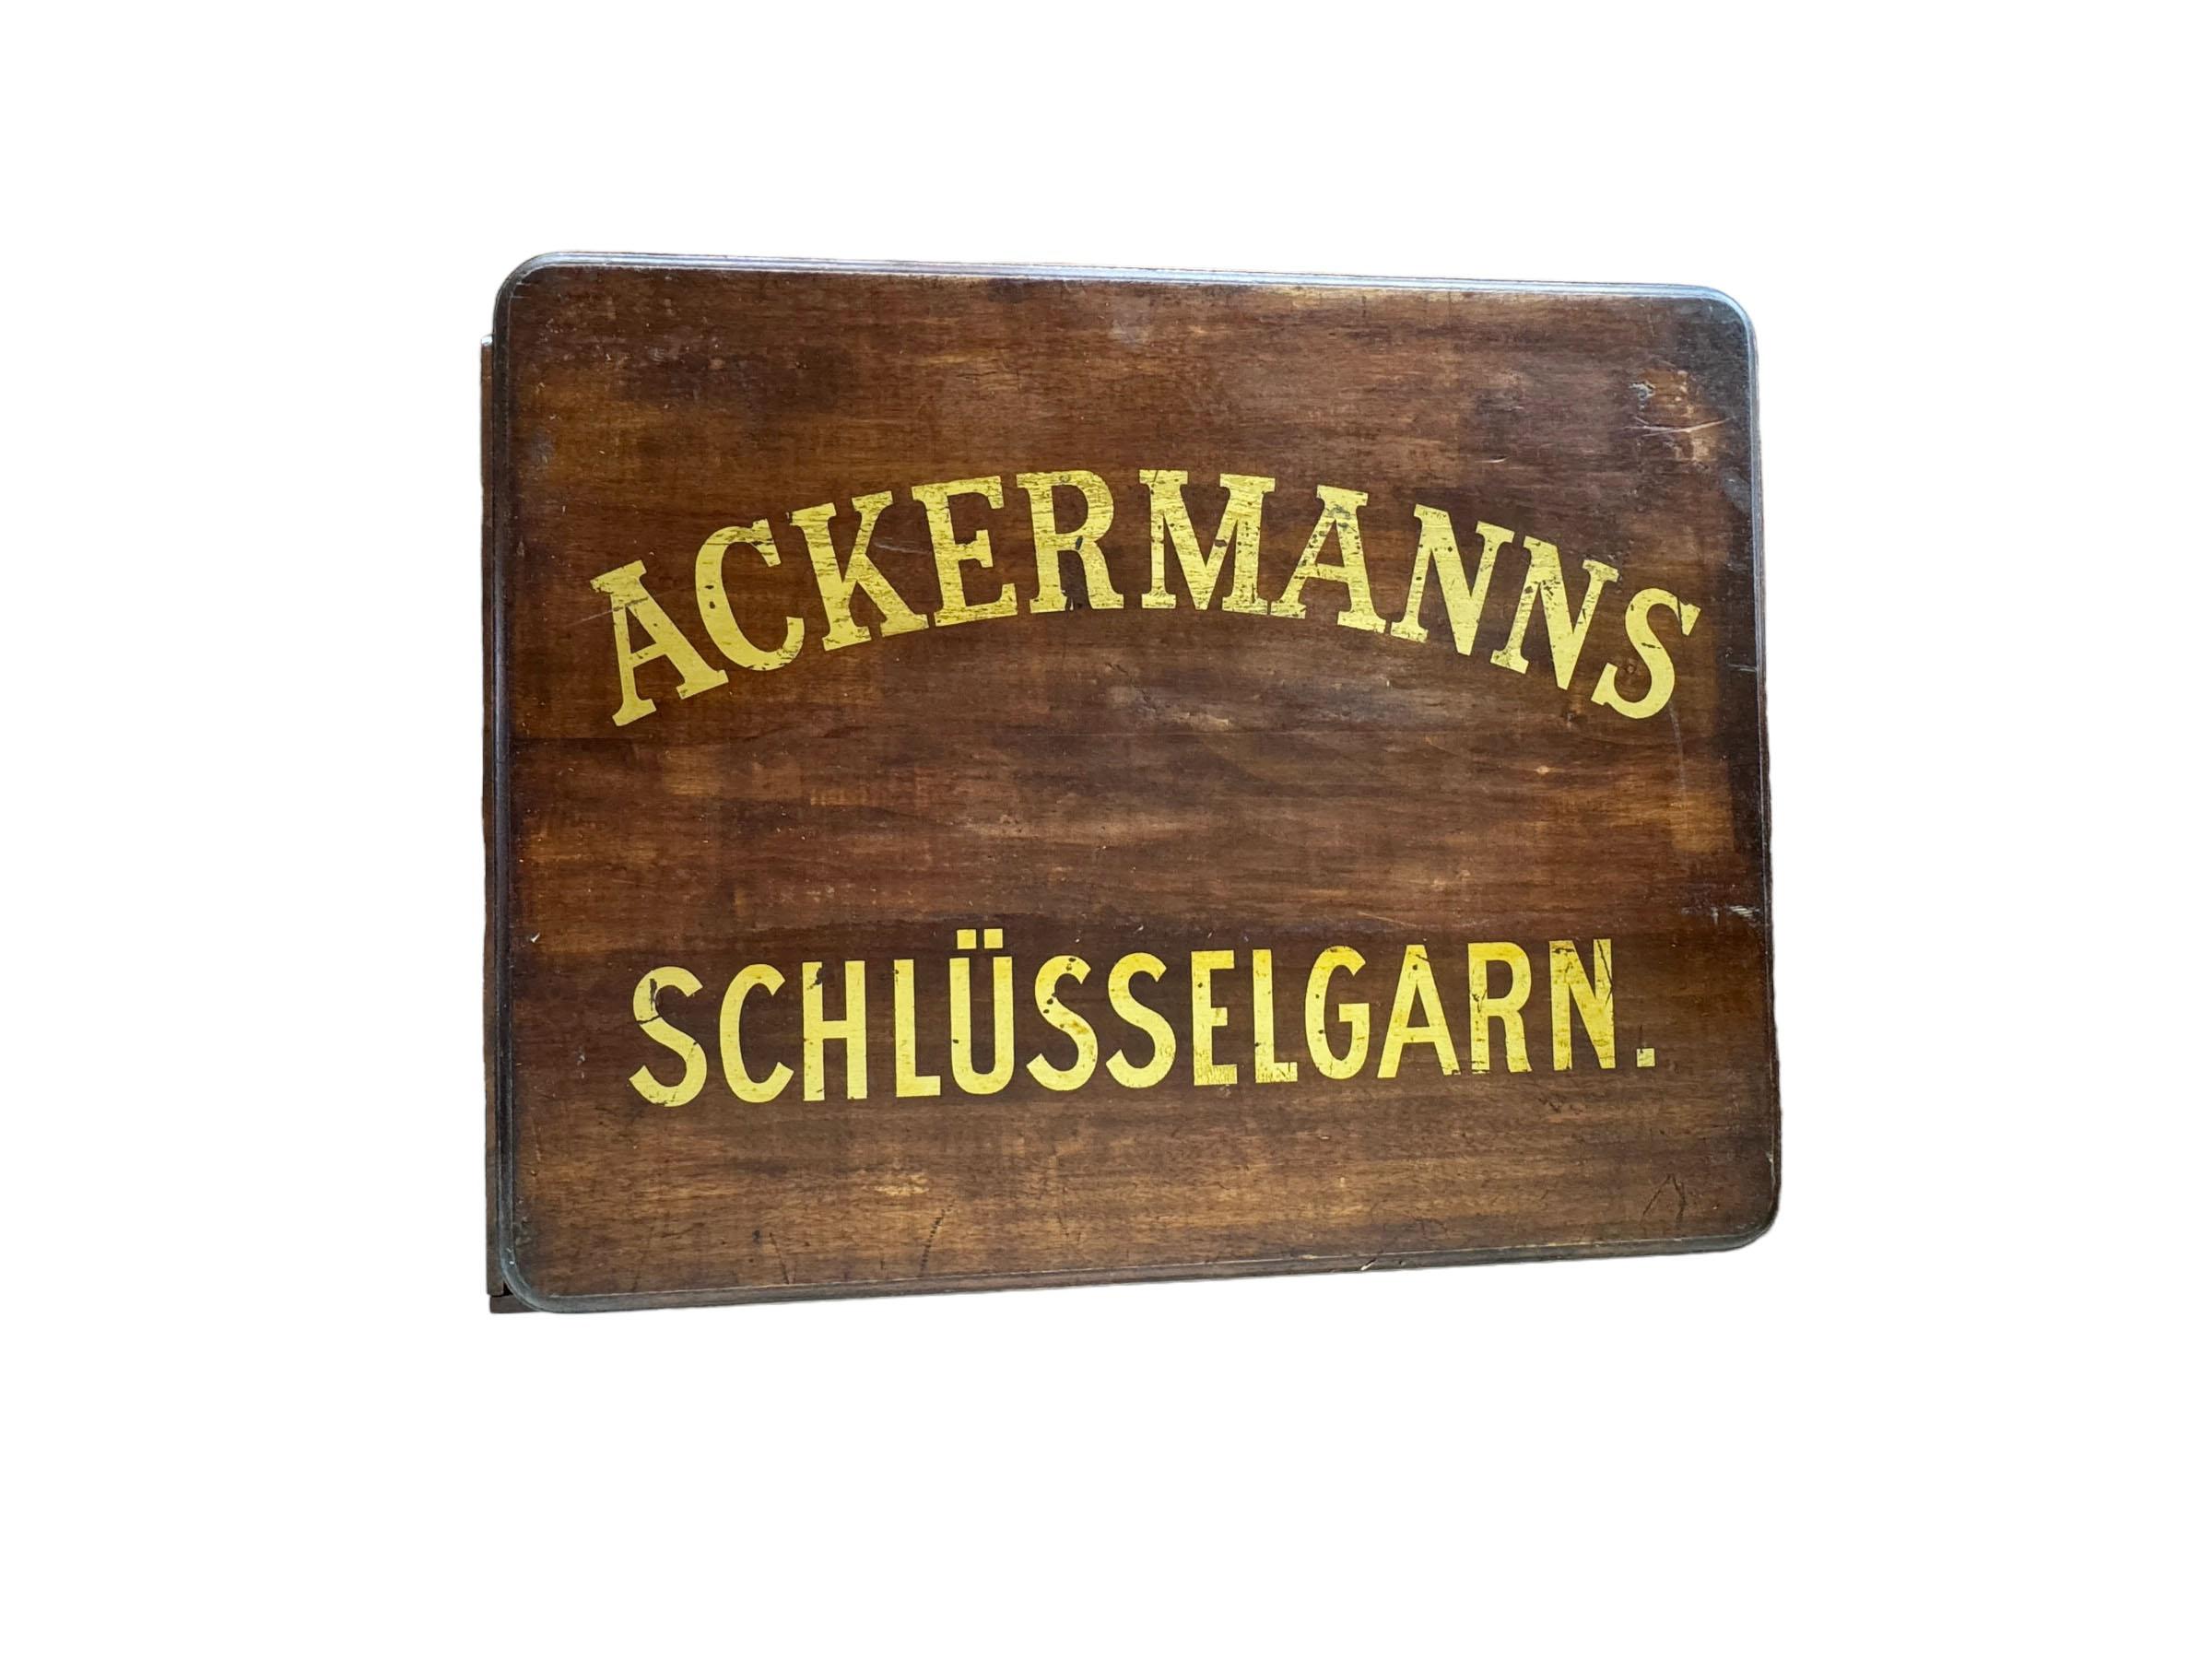 Ackermanns Schlusselgarn German Trading Card Advertising Spool Cabinet For Sale 1